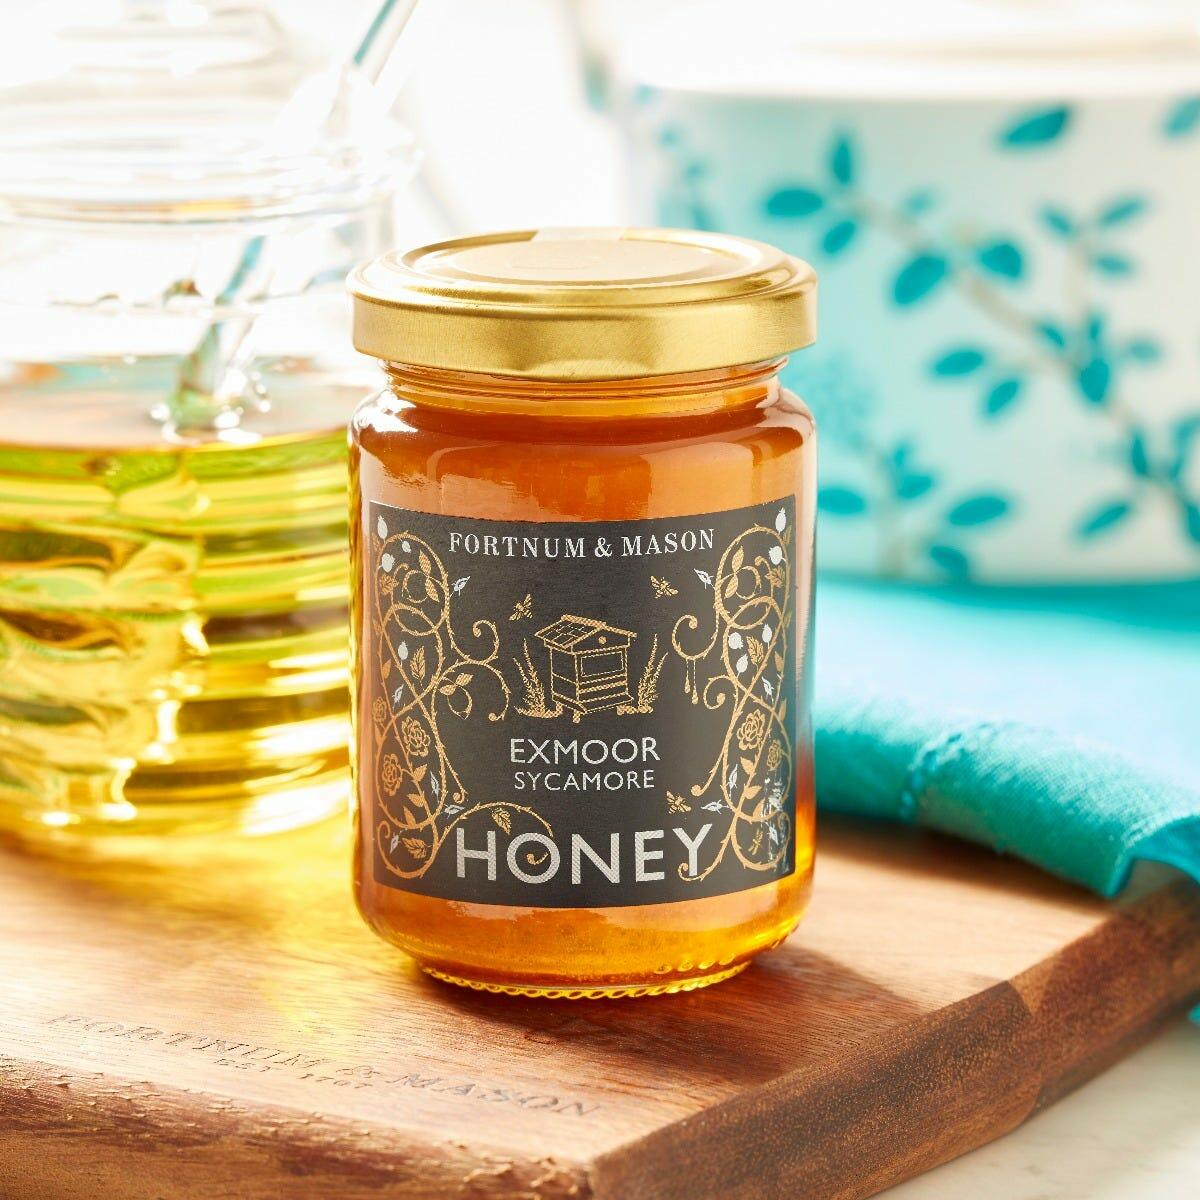 Exmoor Sycamore Honey, 200g, Fortnum & Mason